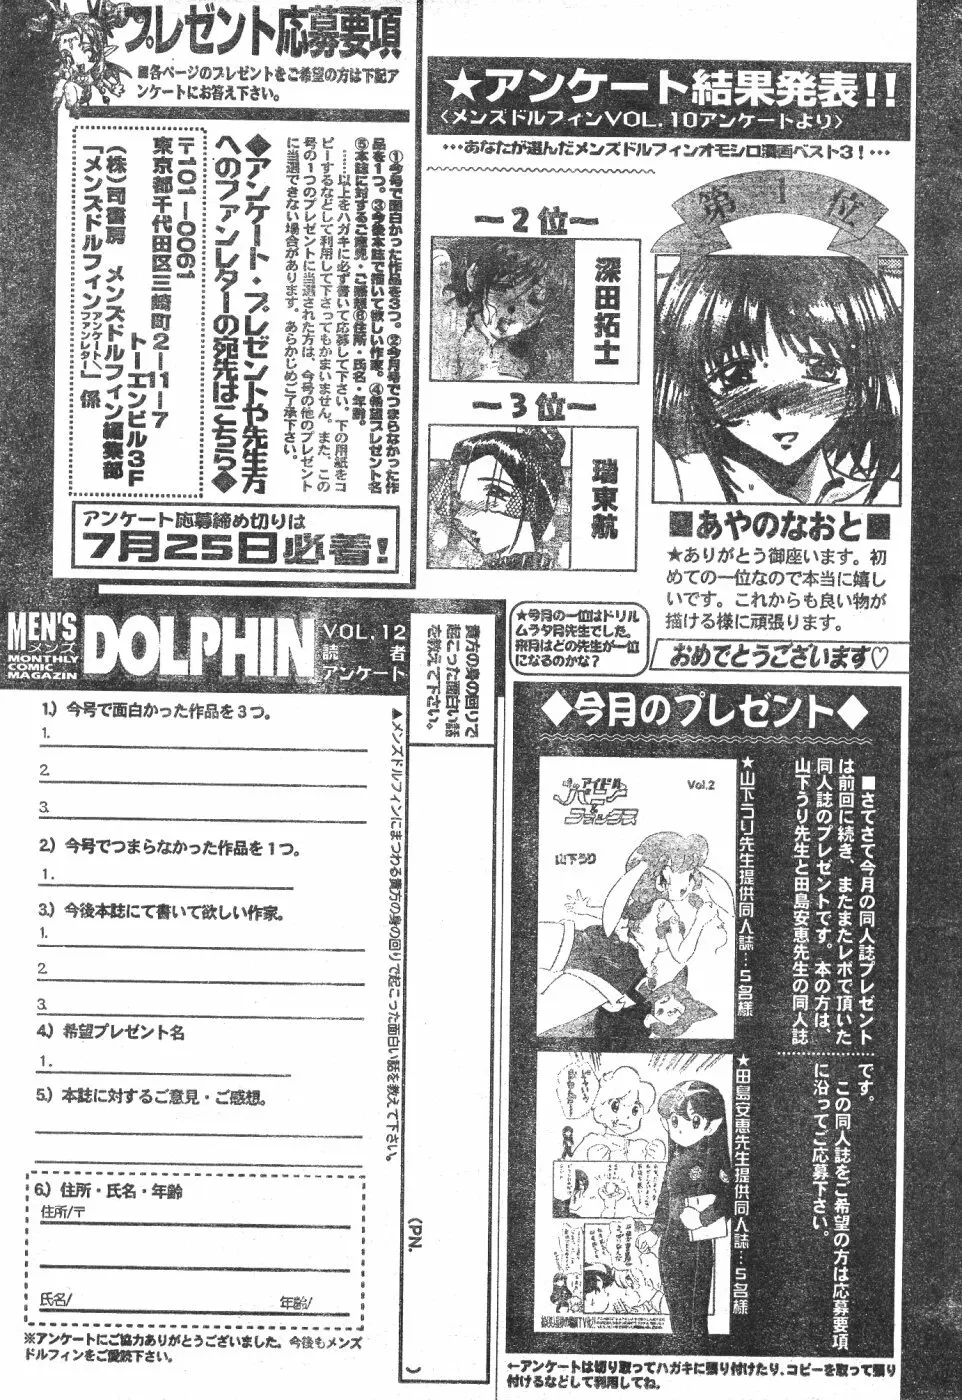 Men's Dolphin Vol 12 2000-08-01 Page.201